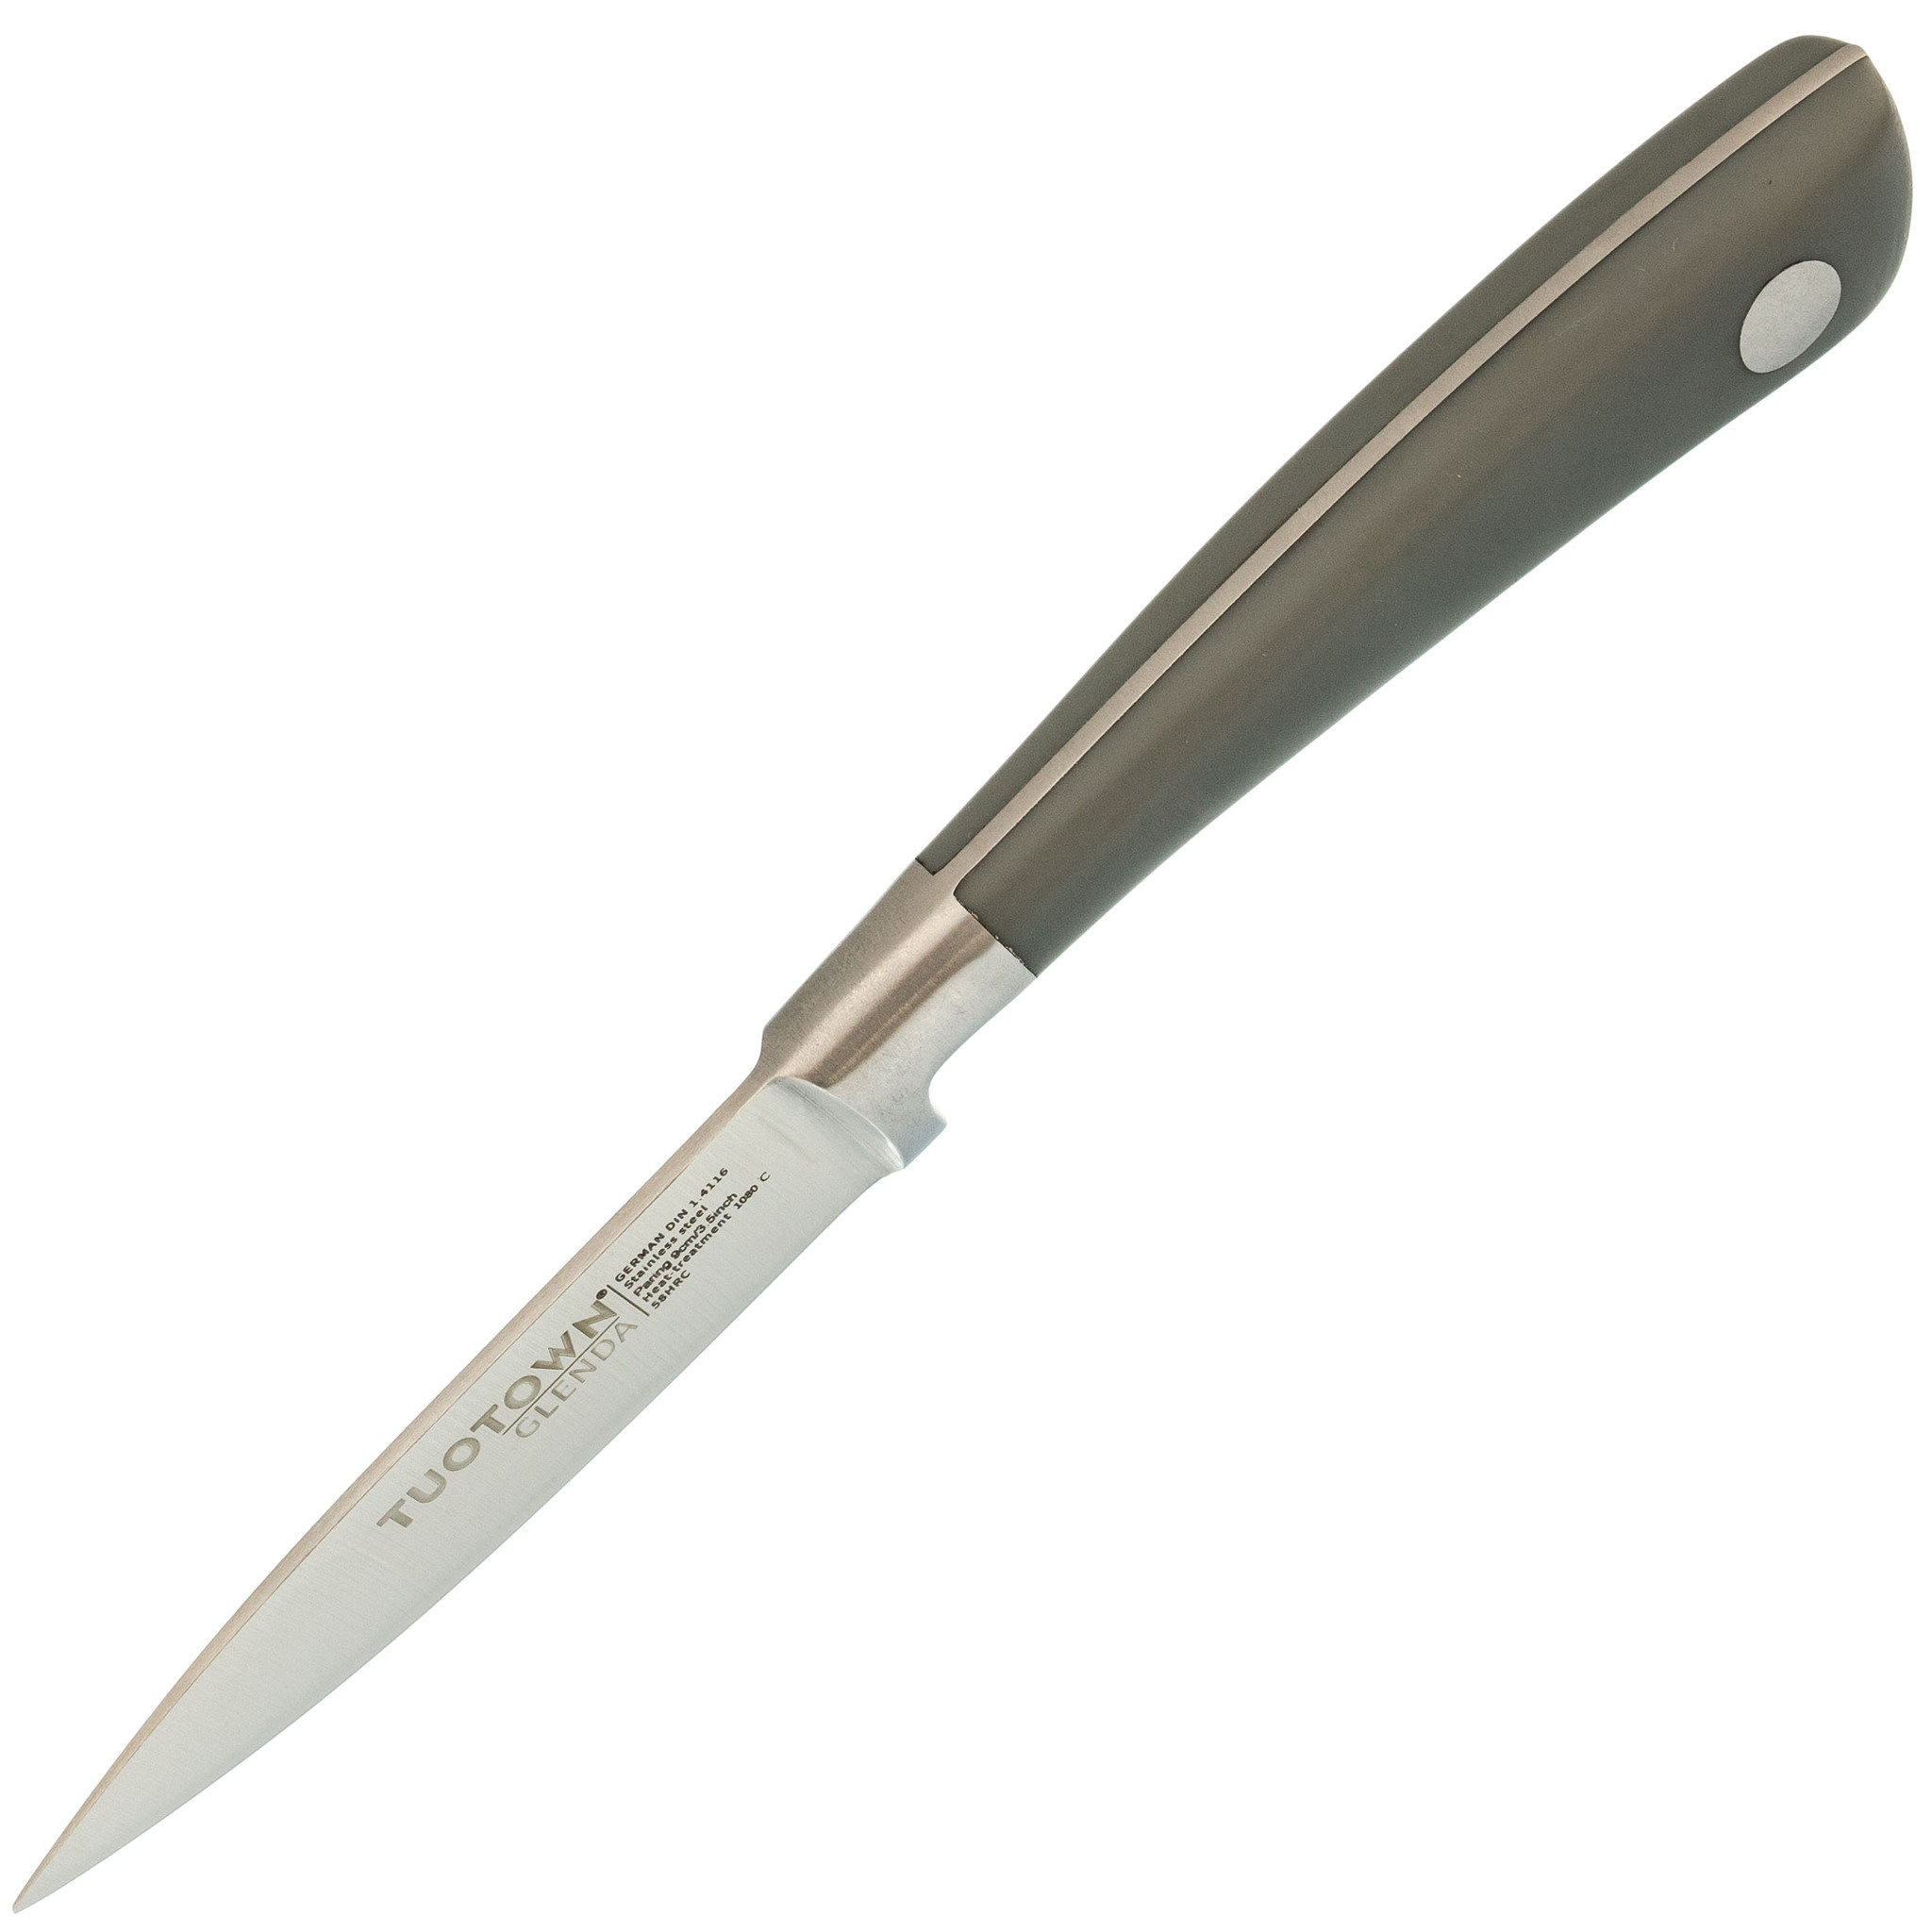 Кухонный нож овощной Tuotown, сталь 1.4116, пластик - фото 3